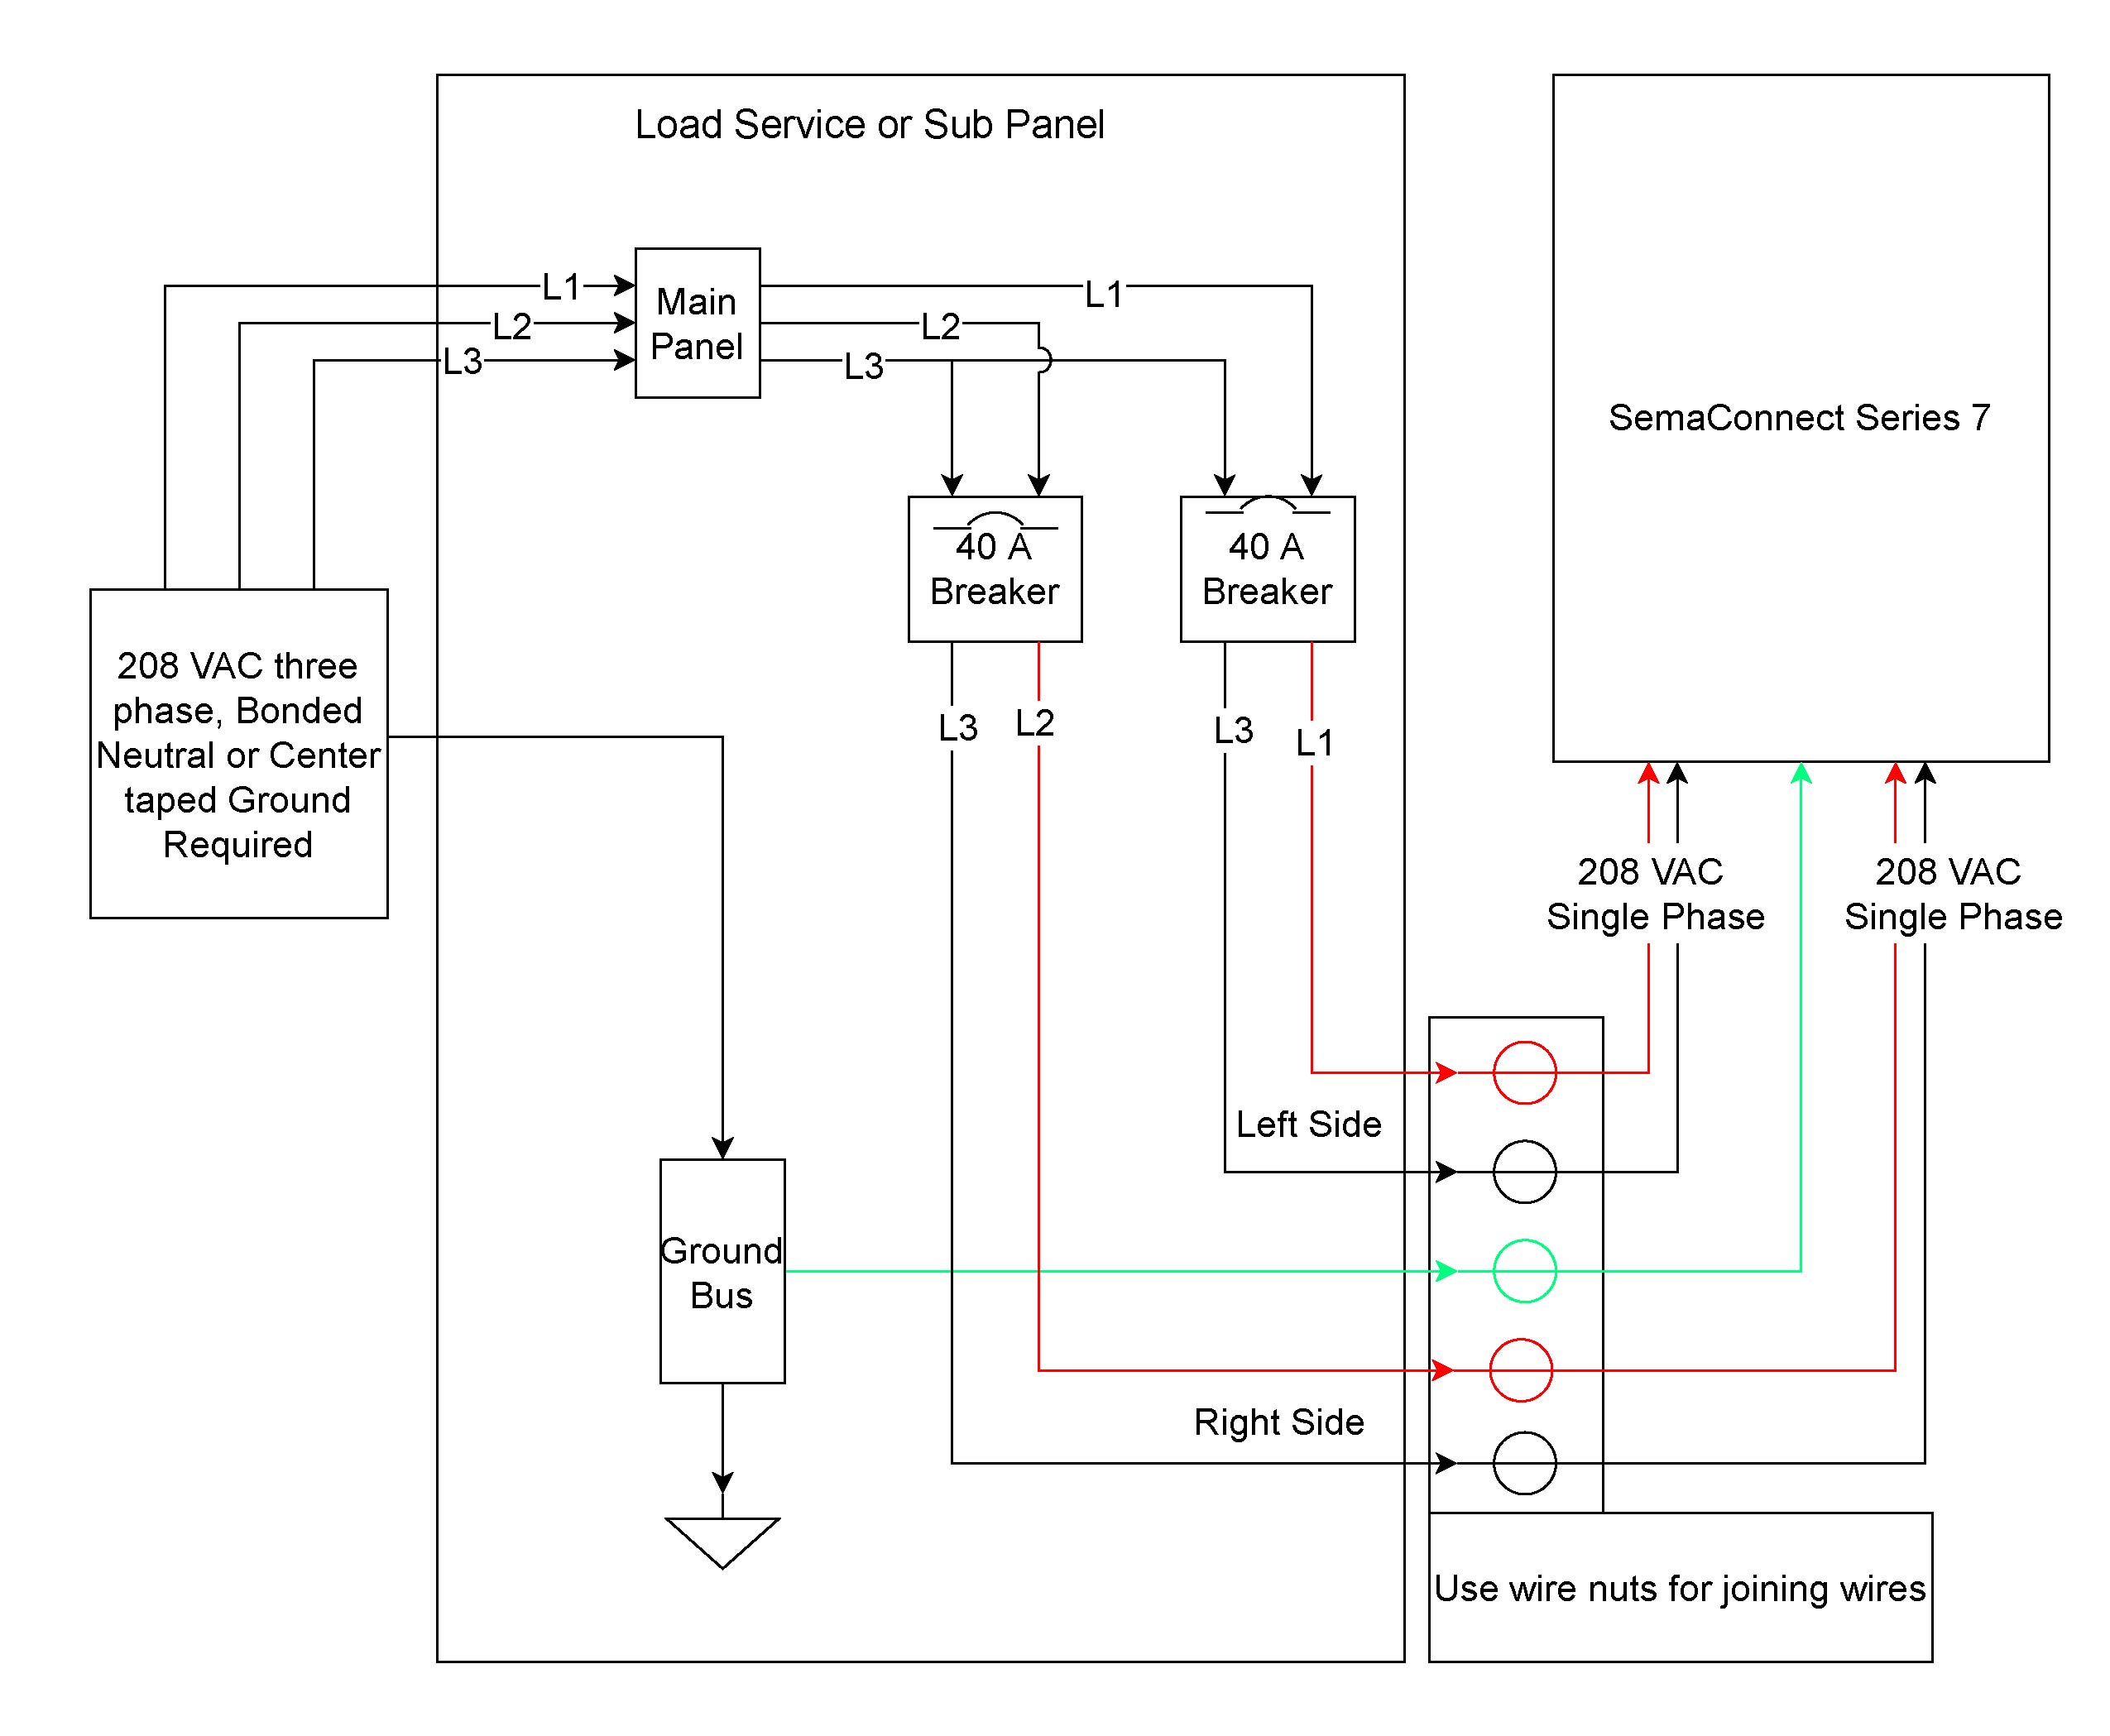 paragon defrost timer 8141-20 wiring diagram